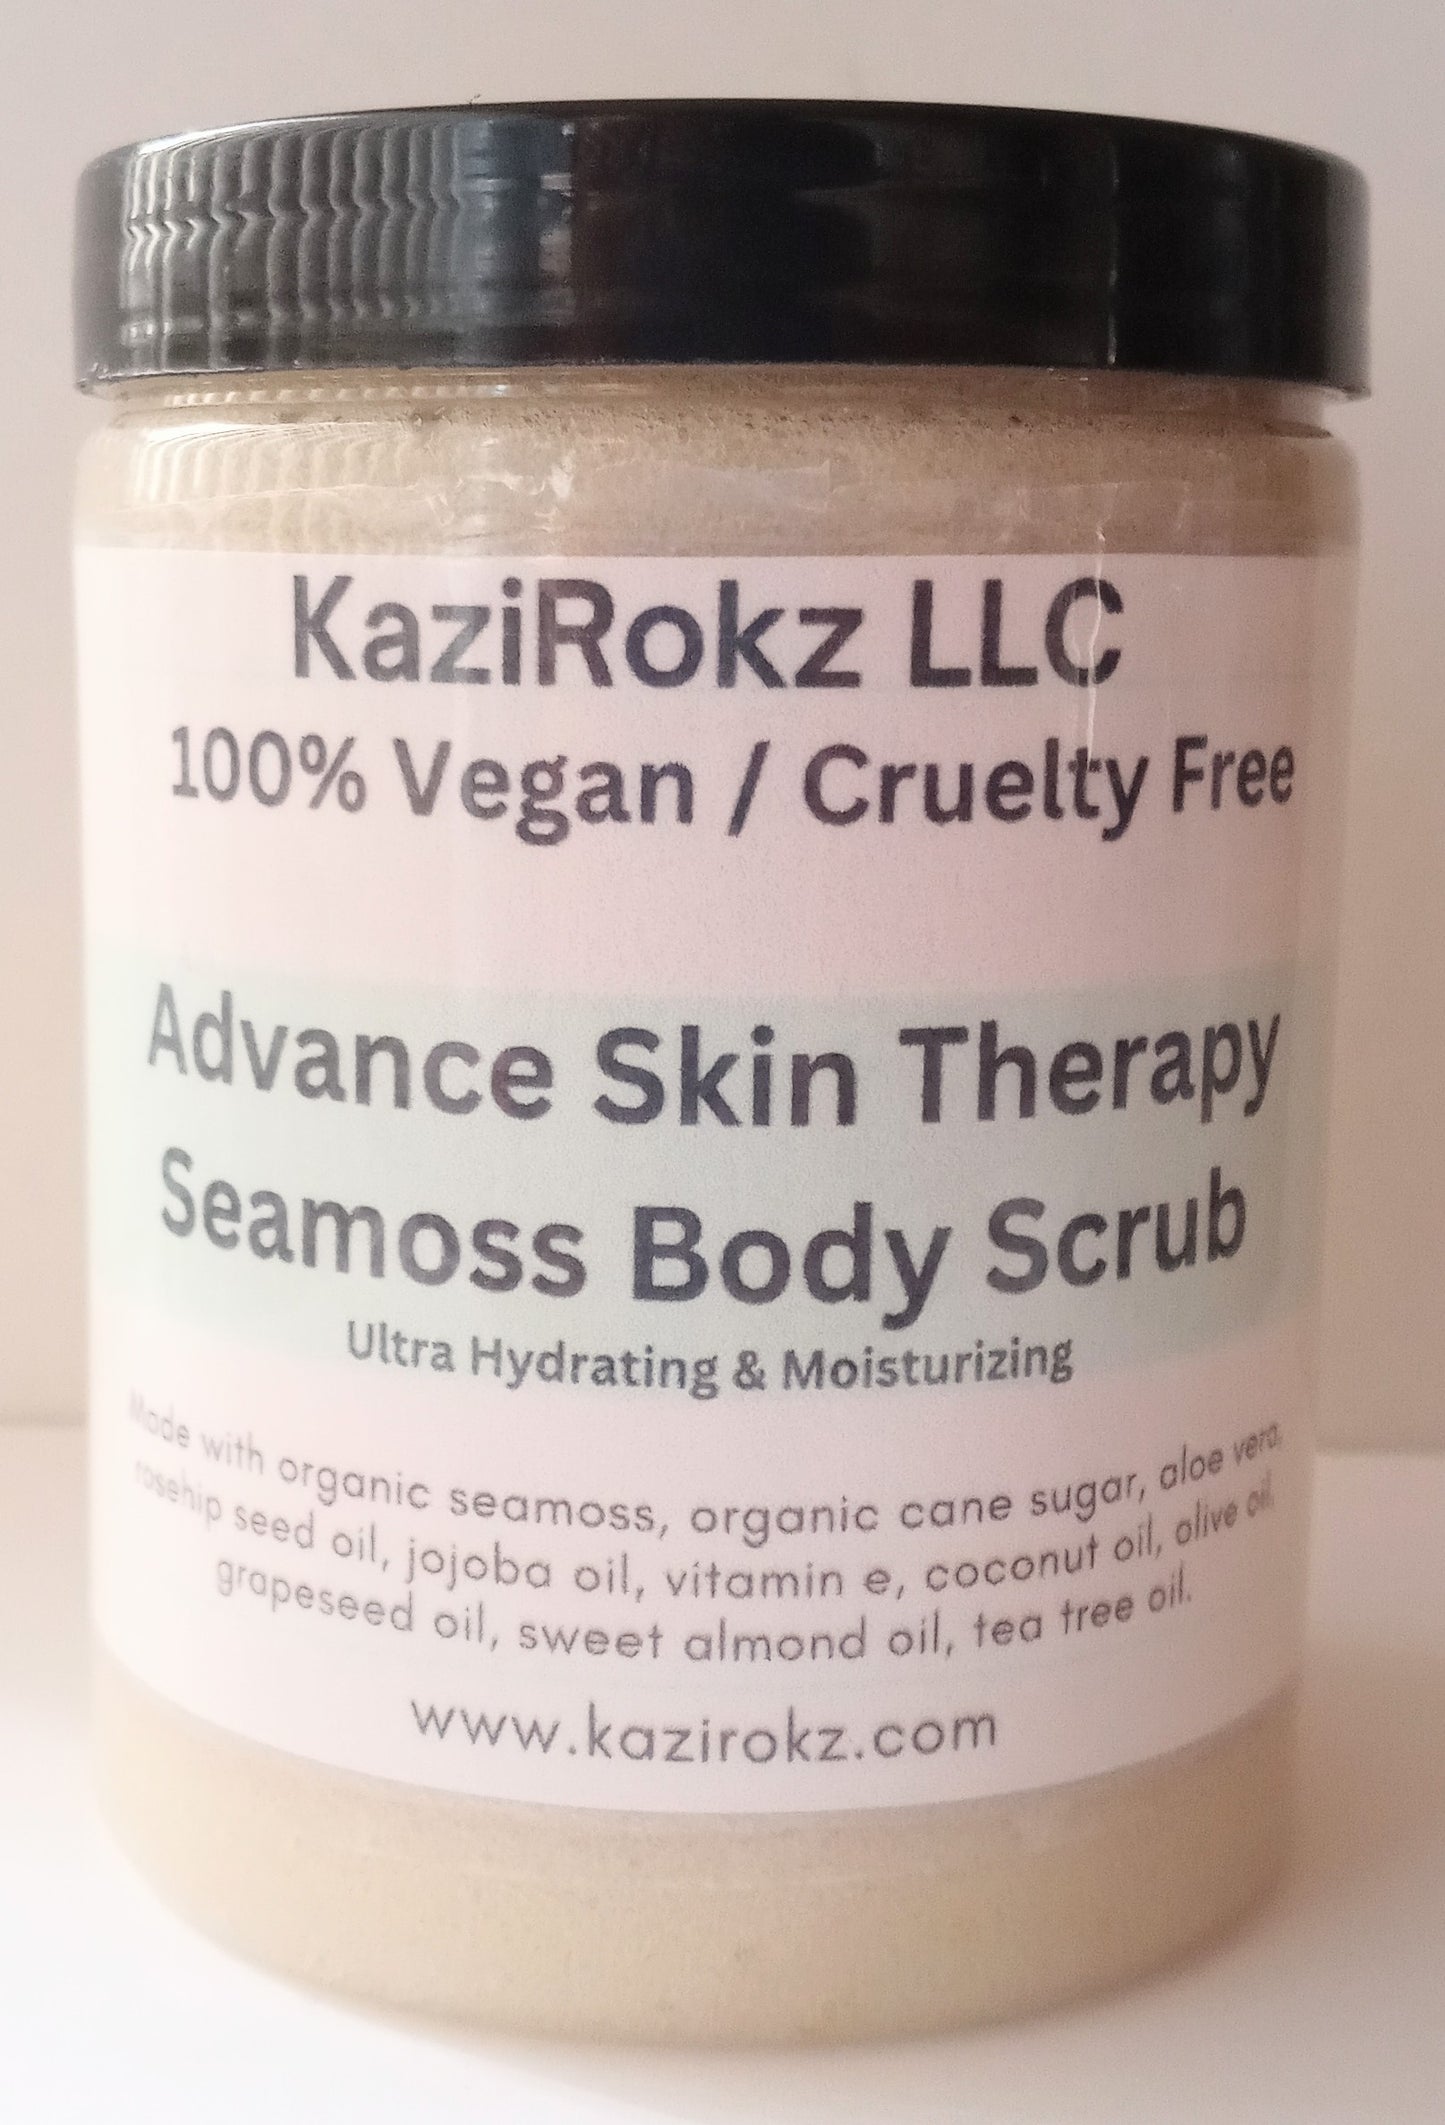 Seamoss Body Scrub 8oz, Advance Skin Therapy (100% Vegan / Cruelty Free)